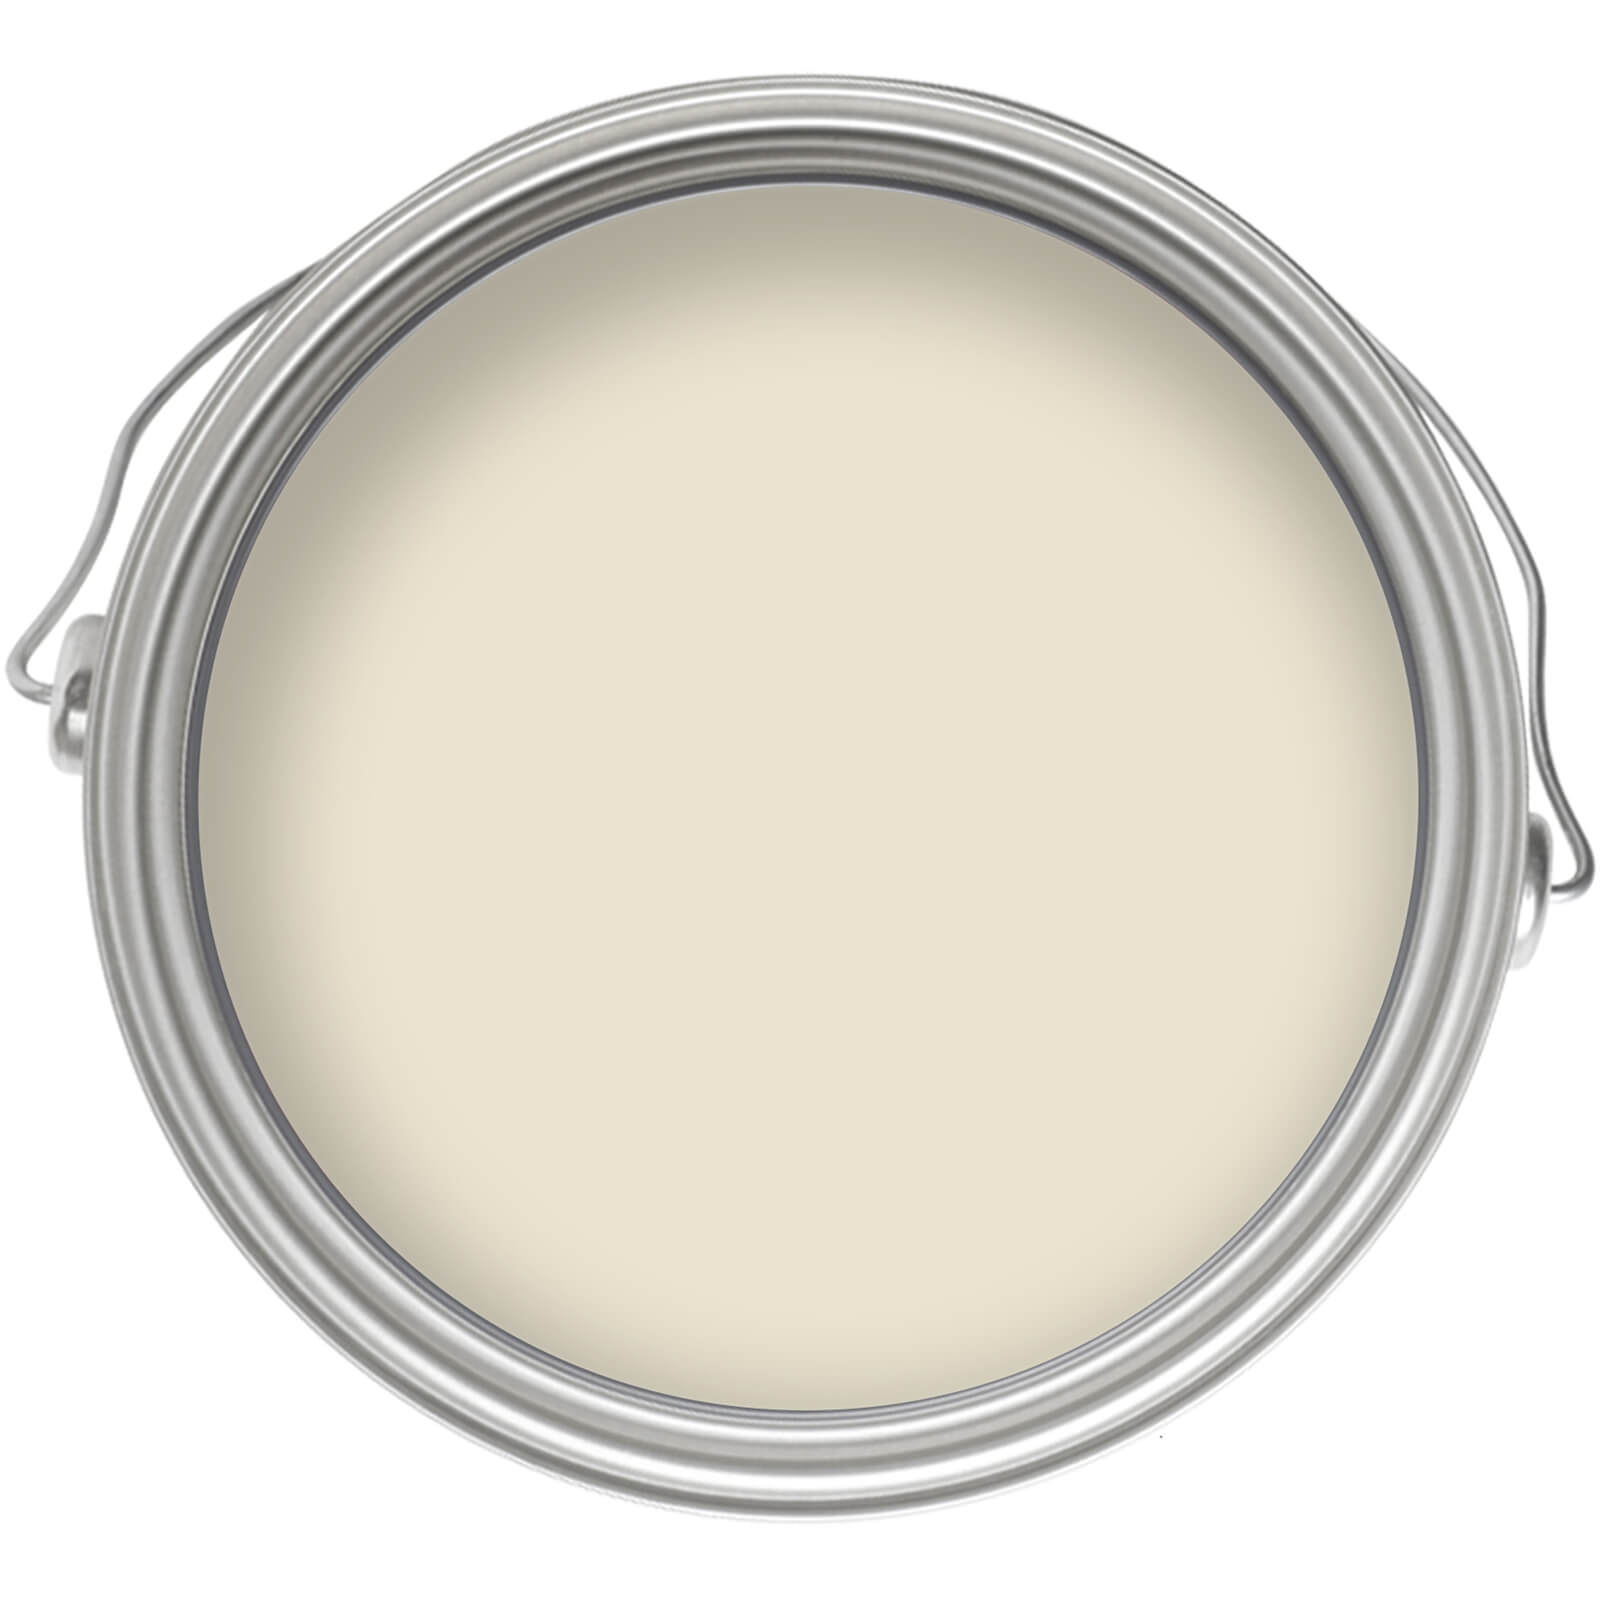 Homebase Silk Emulsion Paint Vanilla Cream - 2.5L